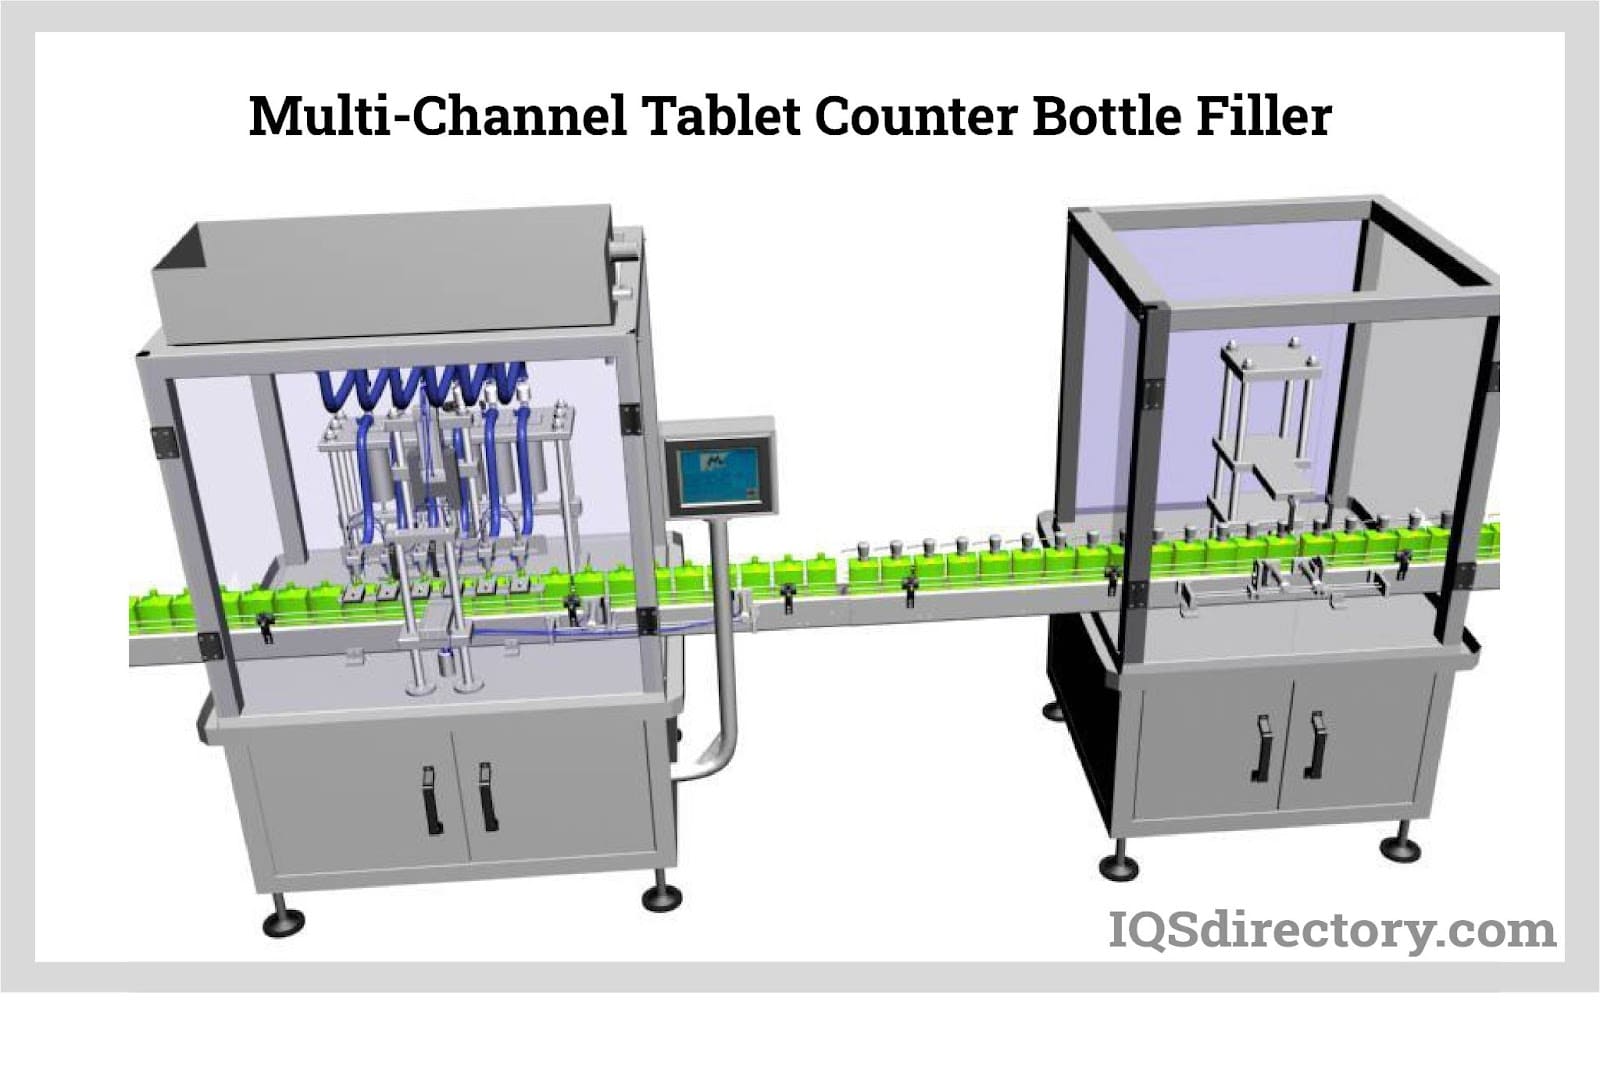 Multi-Channel Tablet Counter Bottle Filler